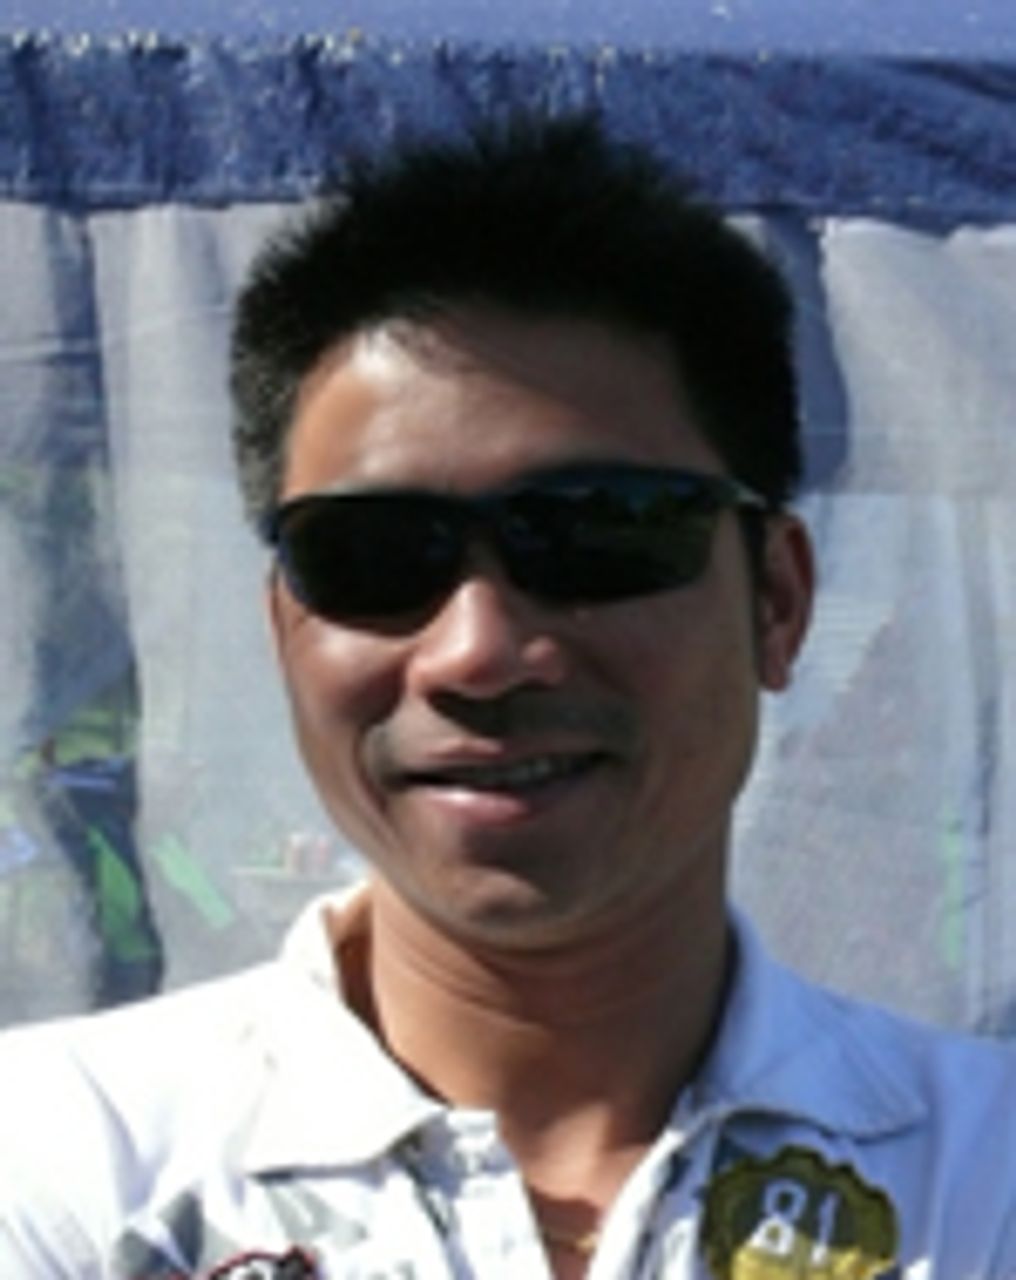 Minh Nguyen